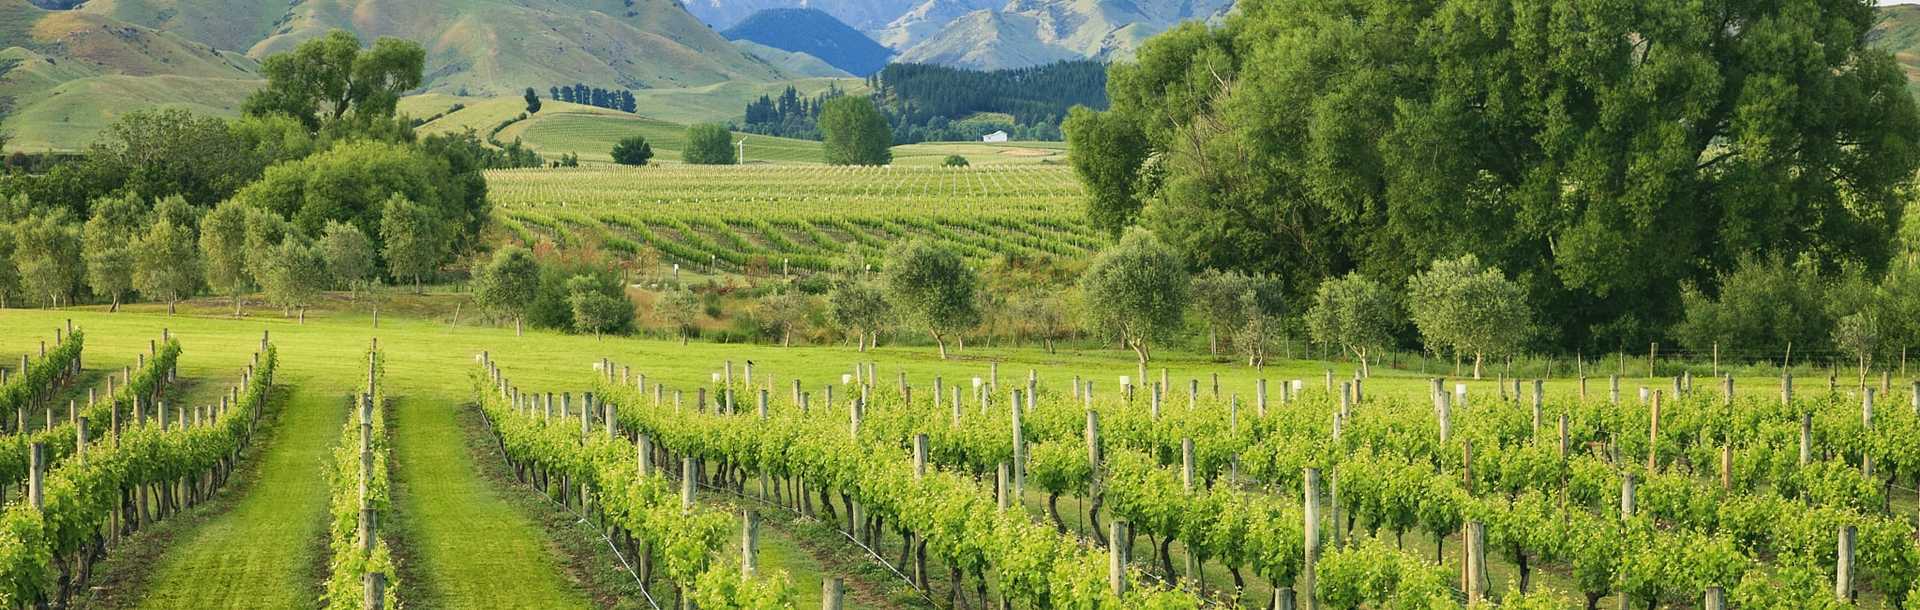 New Zealand Wine Tours - Vineyards in Marlborough